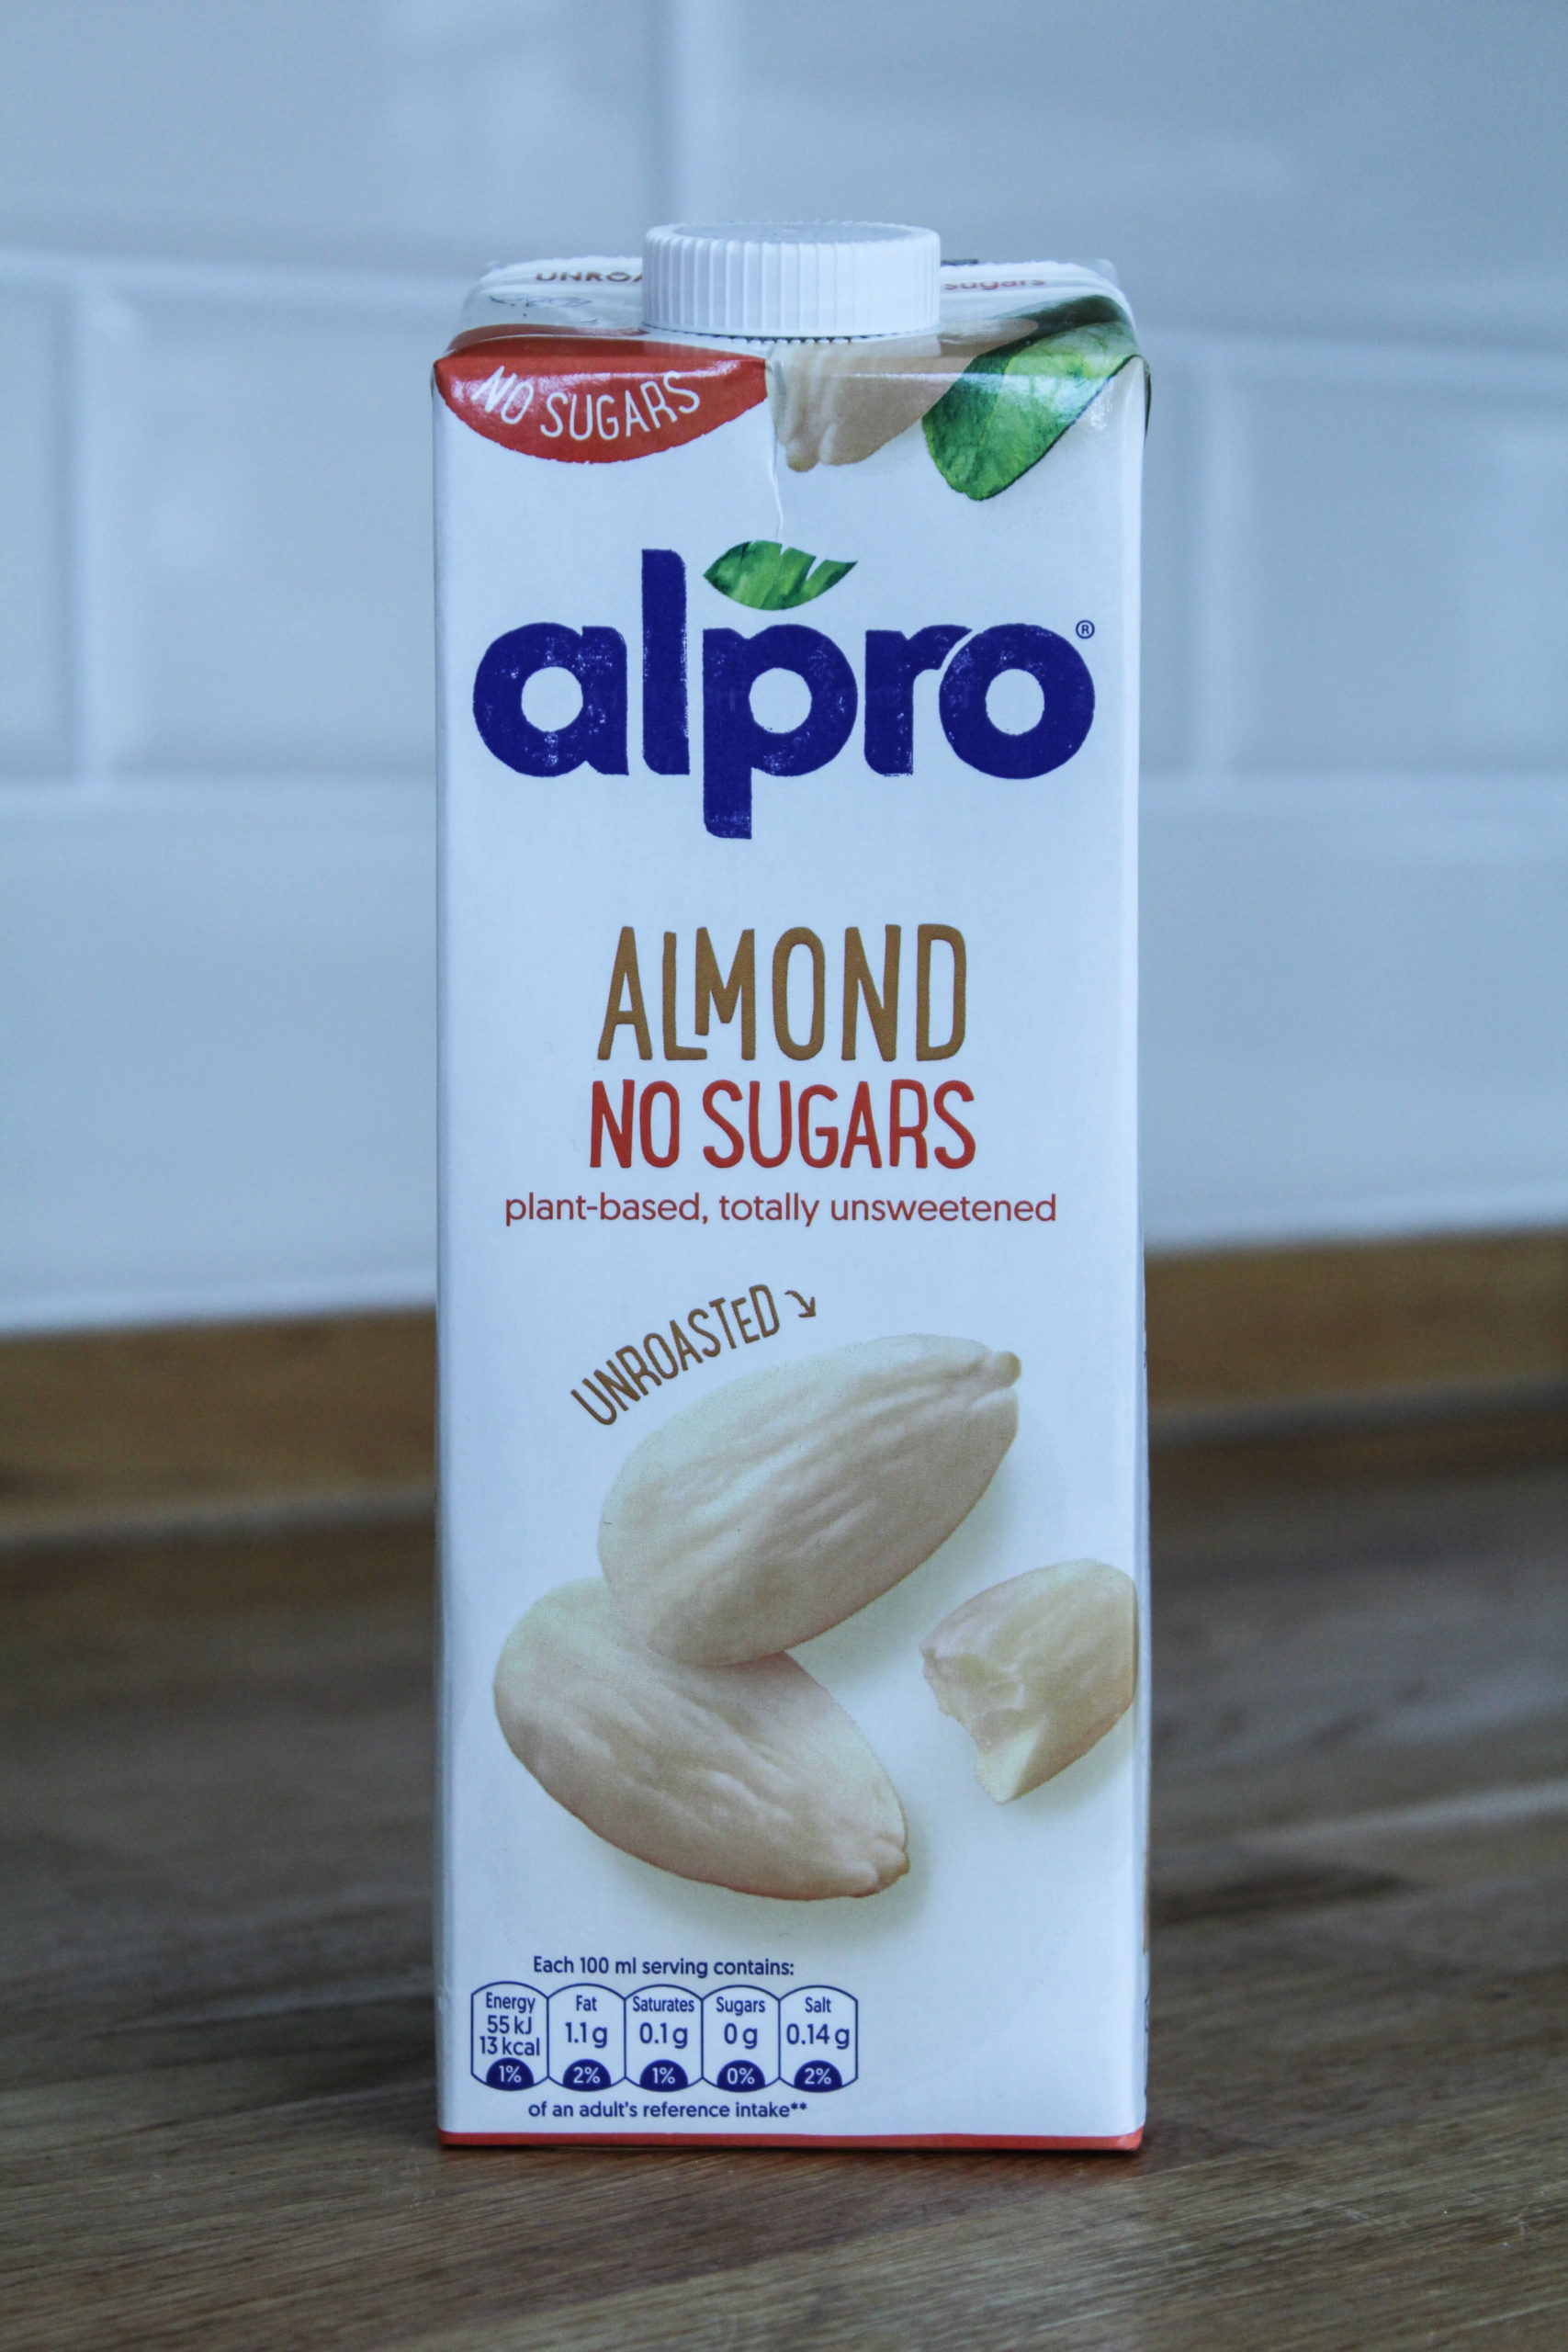 Alpro Almond No Sugars Unroasted